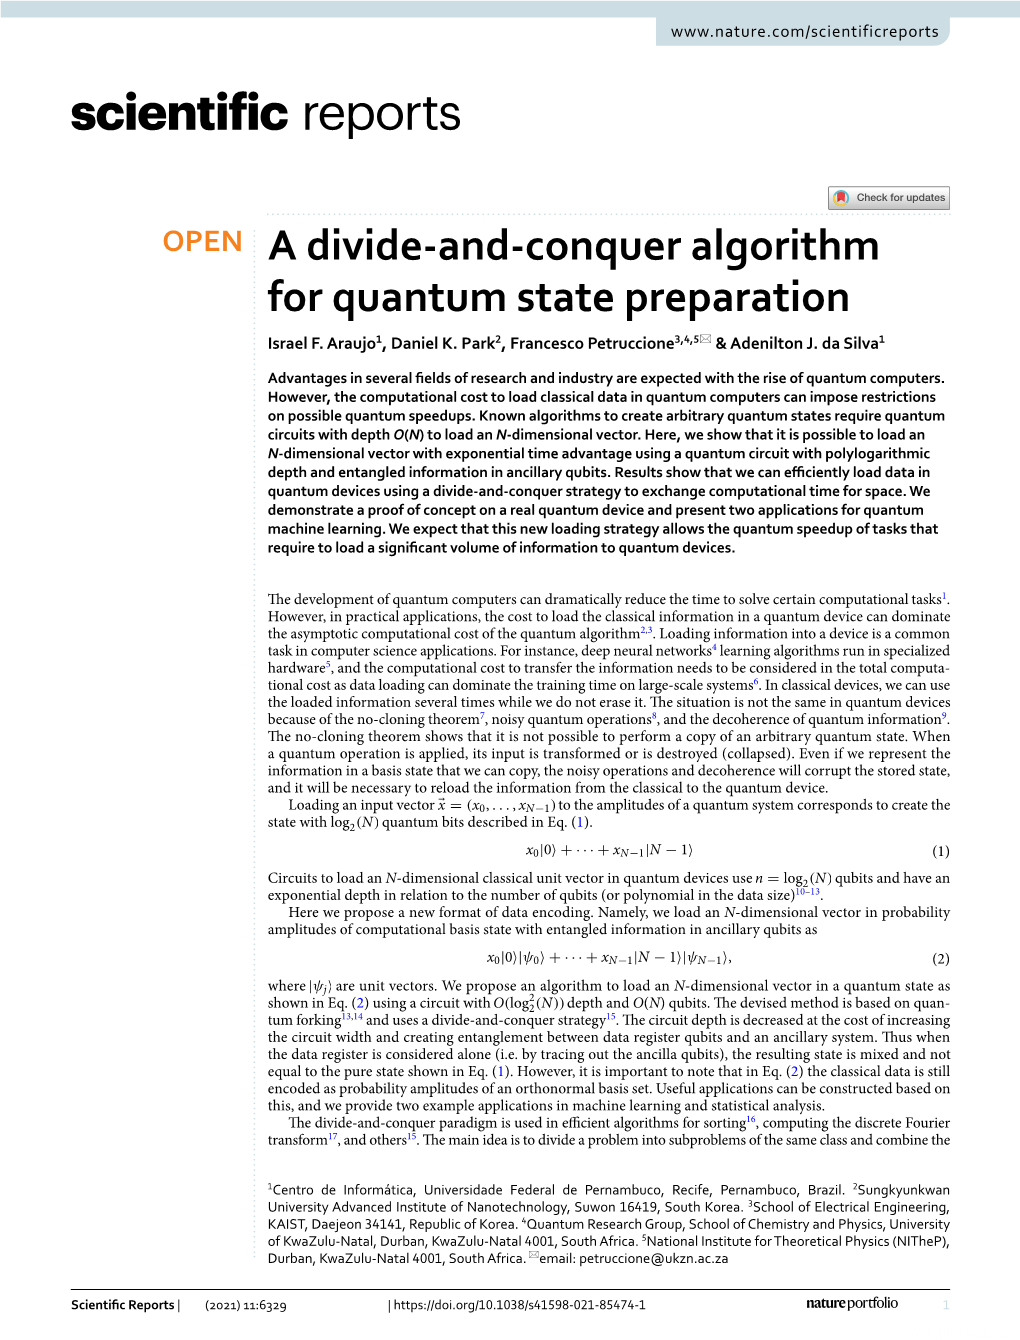 A Divide-And-Conquer Algorithm for Quantum State Preparation